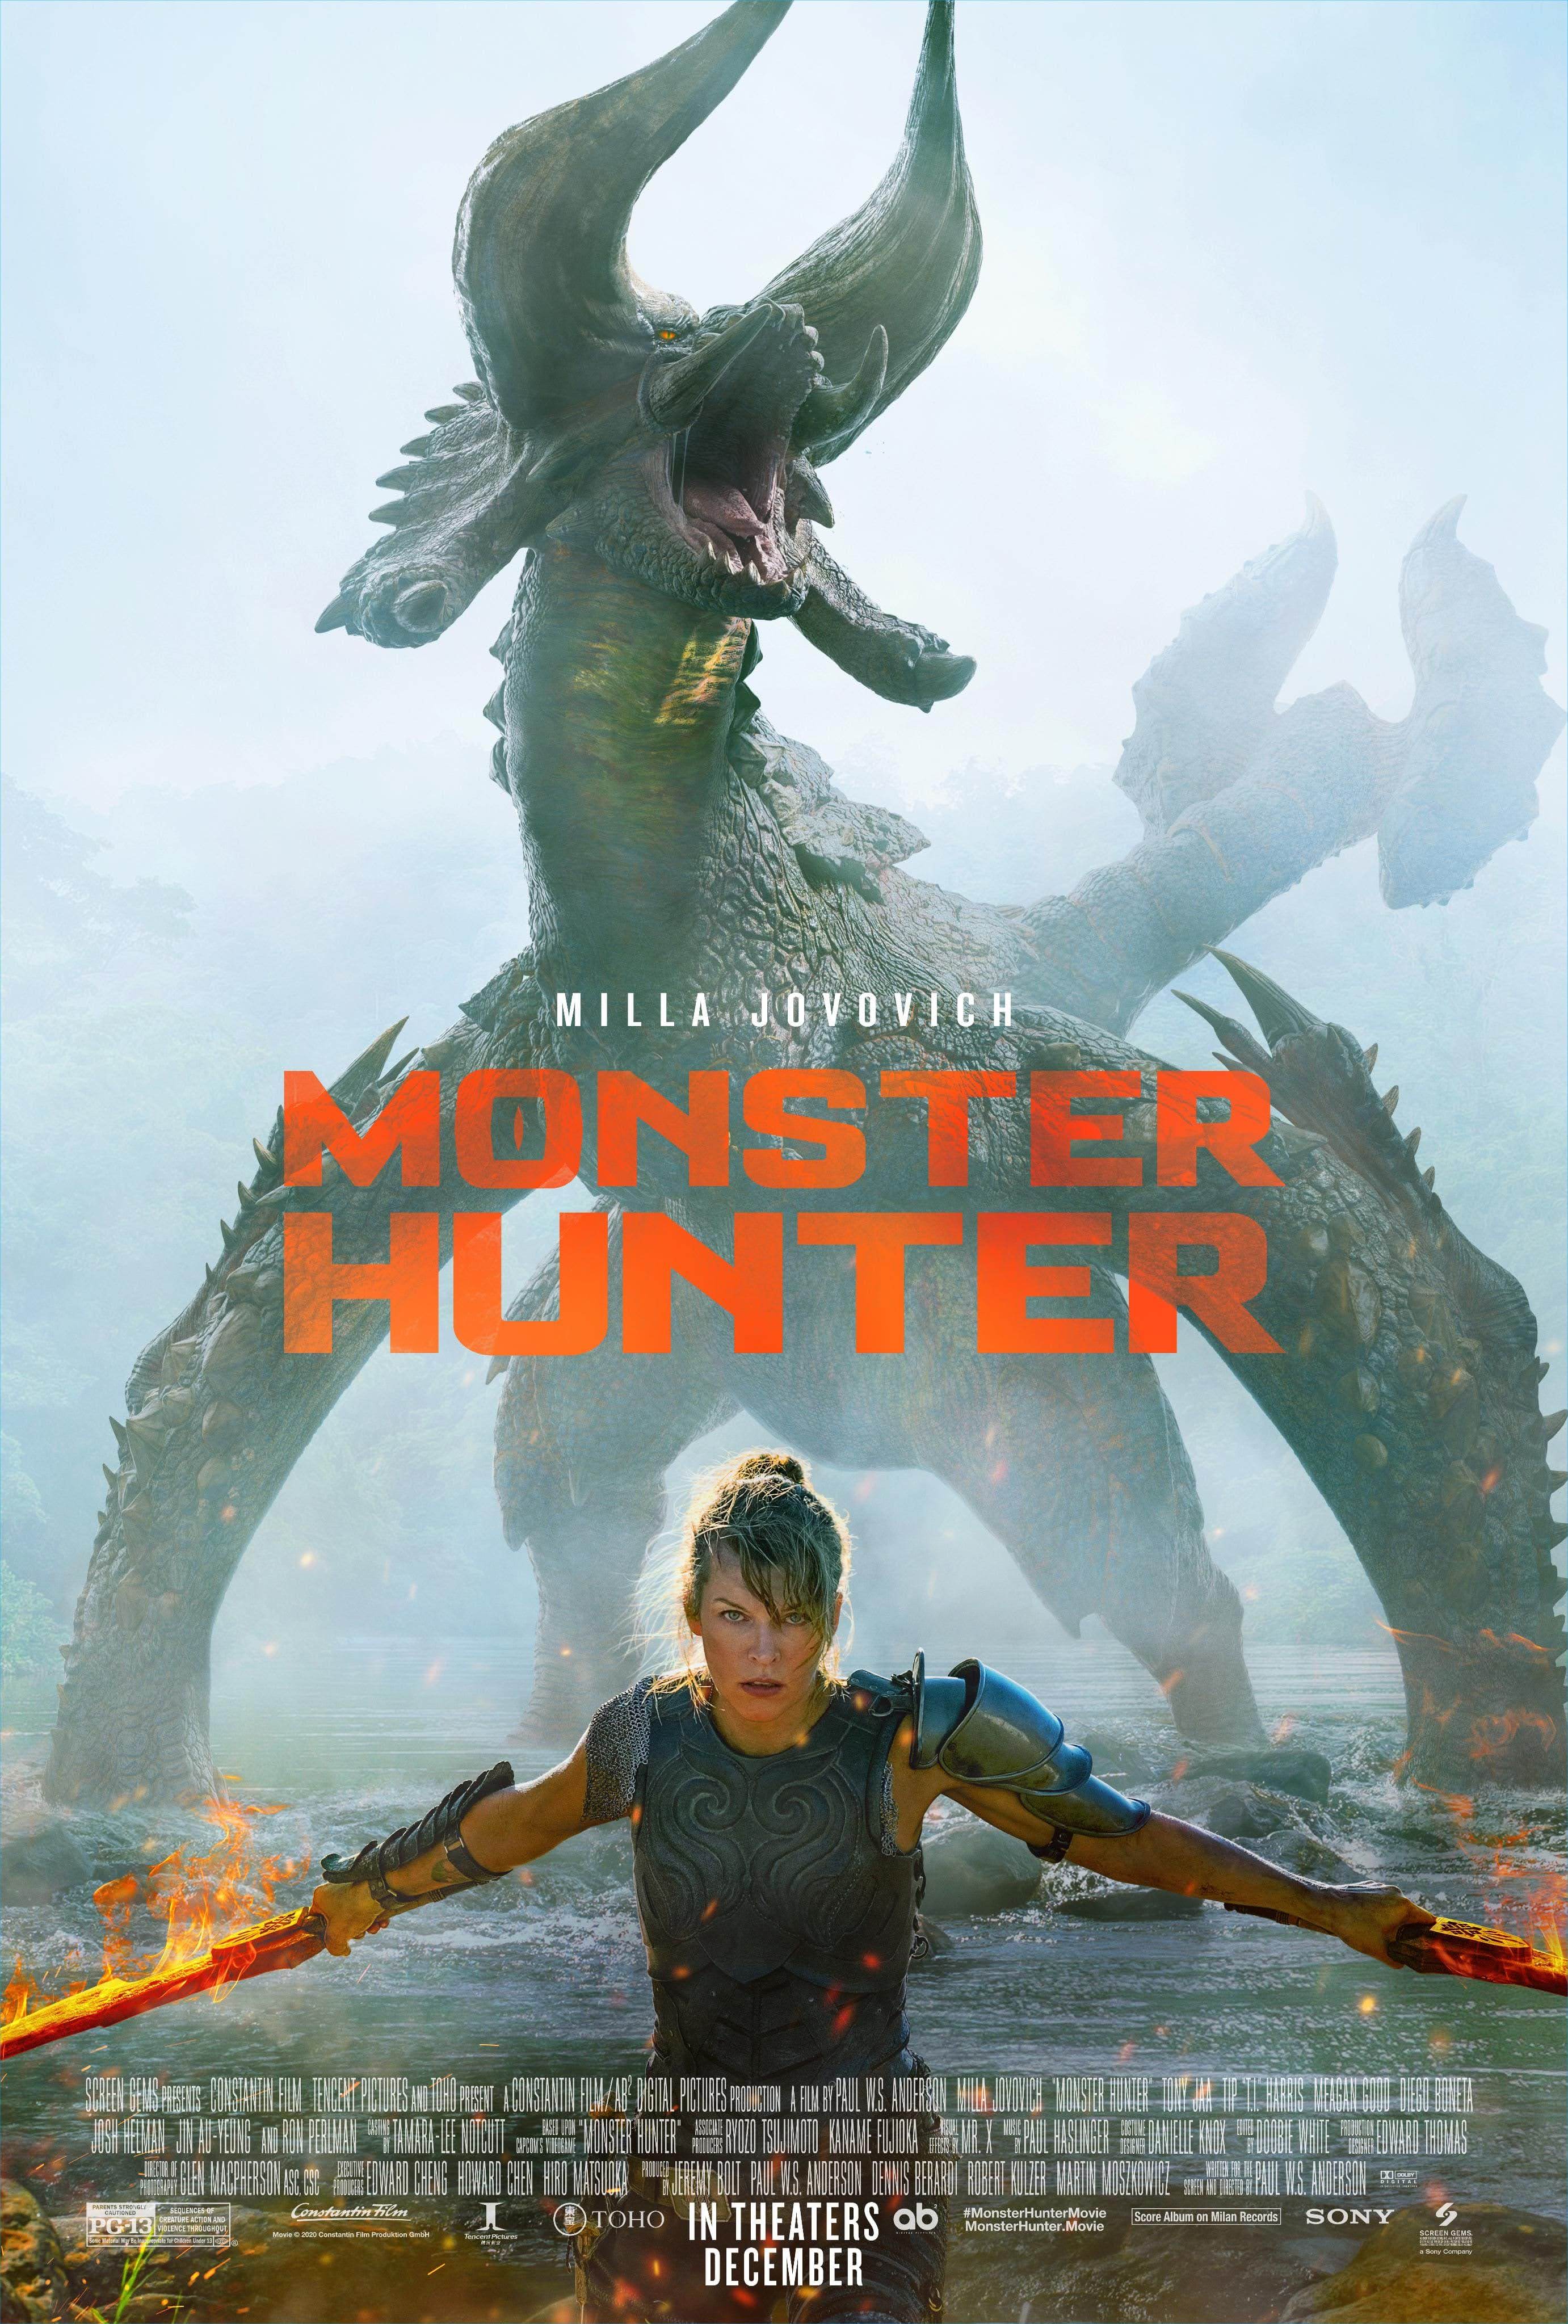 Monster Hunter バイオハザード夫婦のミラ ジョヴォヴィッチとポール W S アンダーソン監督が カプコンの人気の狩りゲーを映画化したファンタジー アクションの最新作 モンスターハンター の全長版の予告編を初公開 Cia Movie News